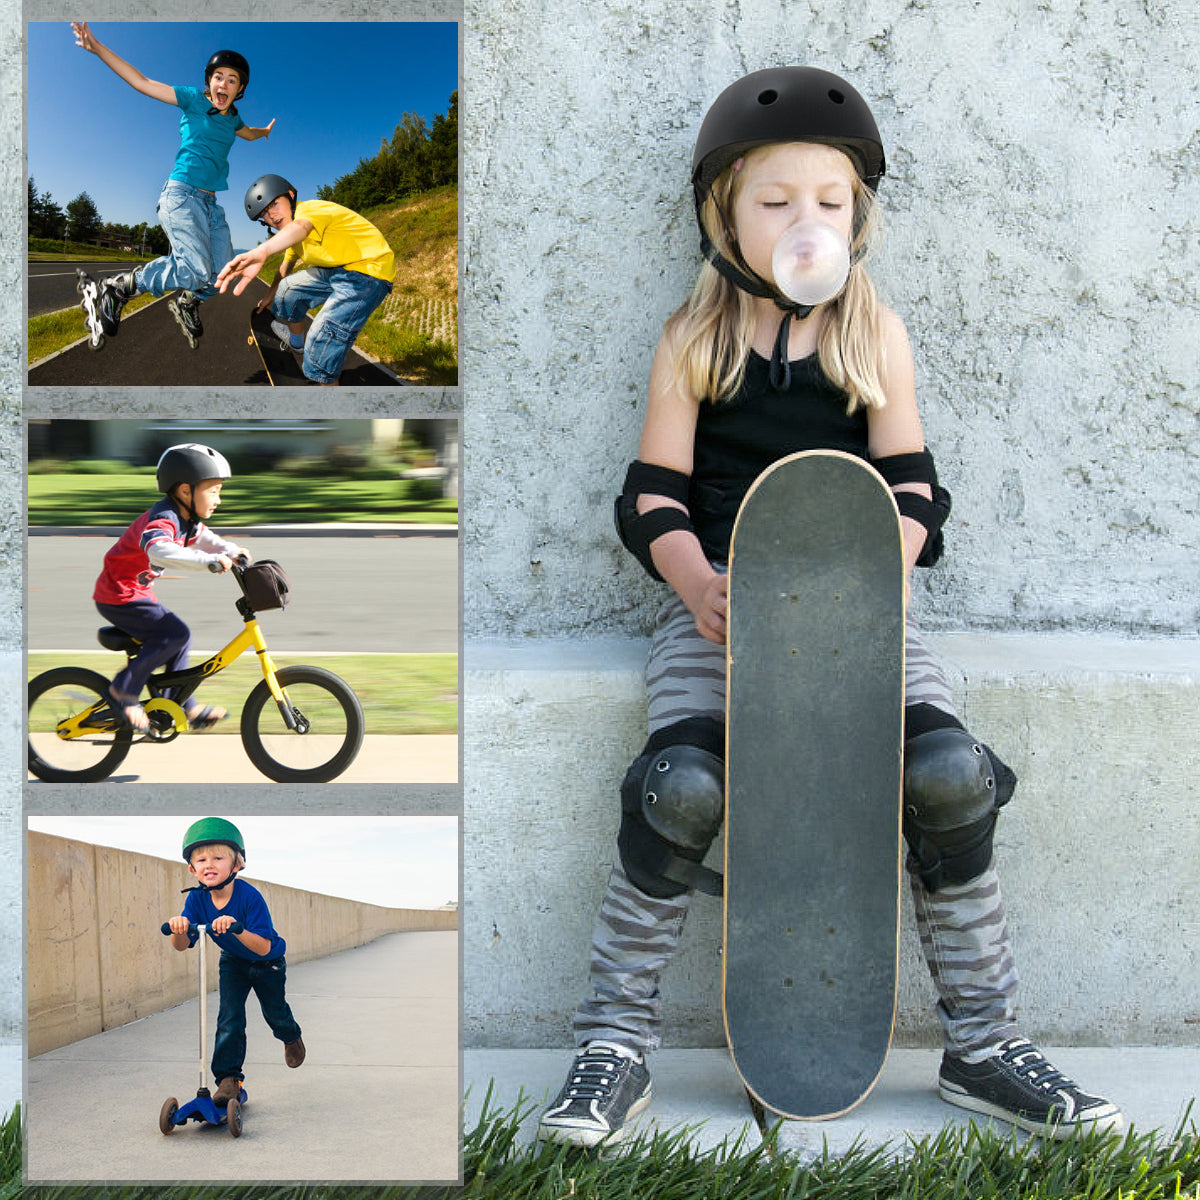 XJD Kids Helmet Sets In Red In Stock USA